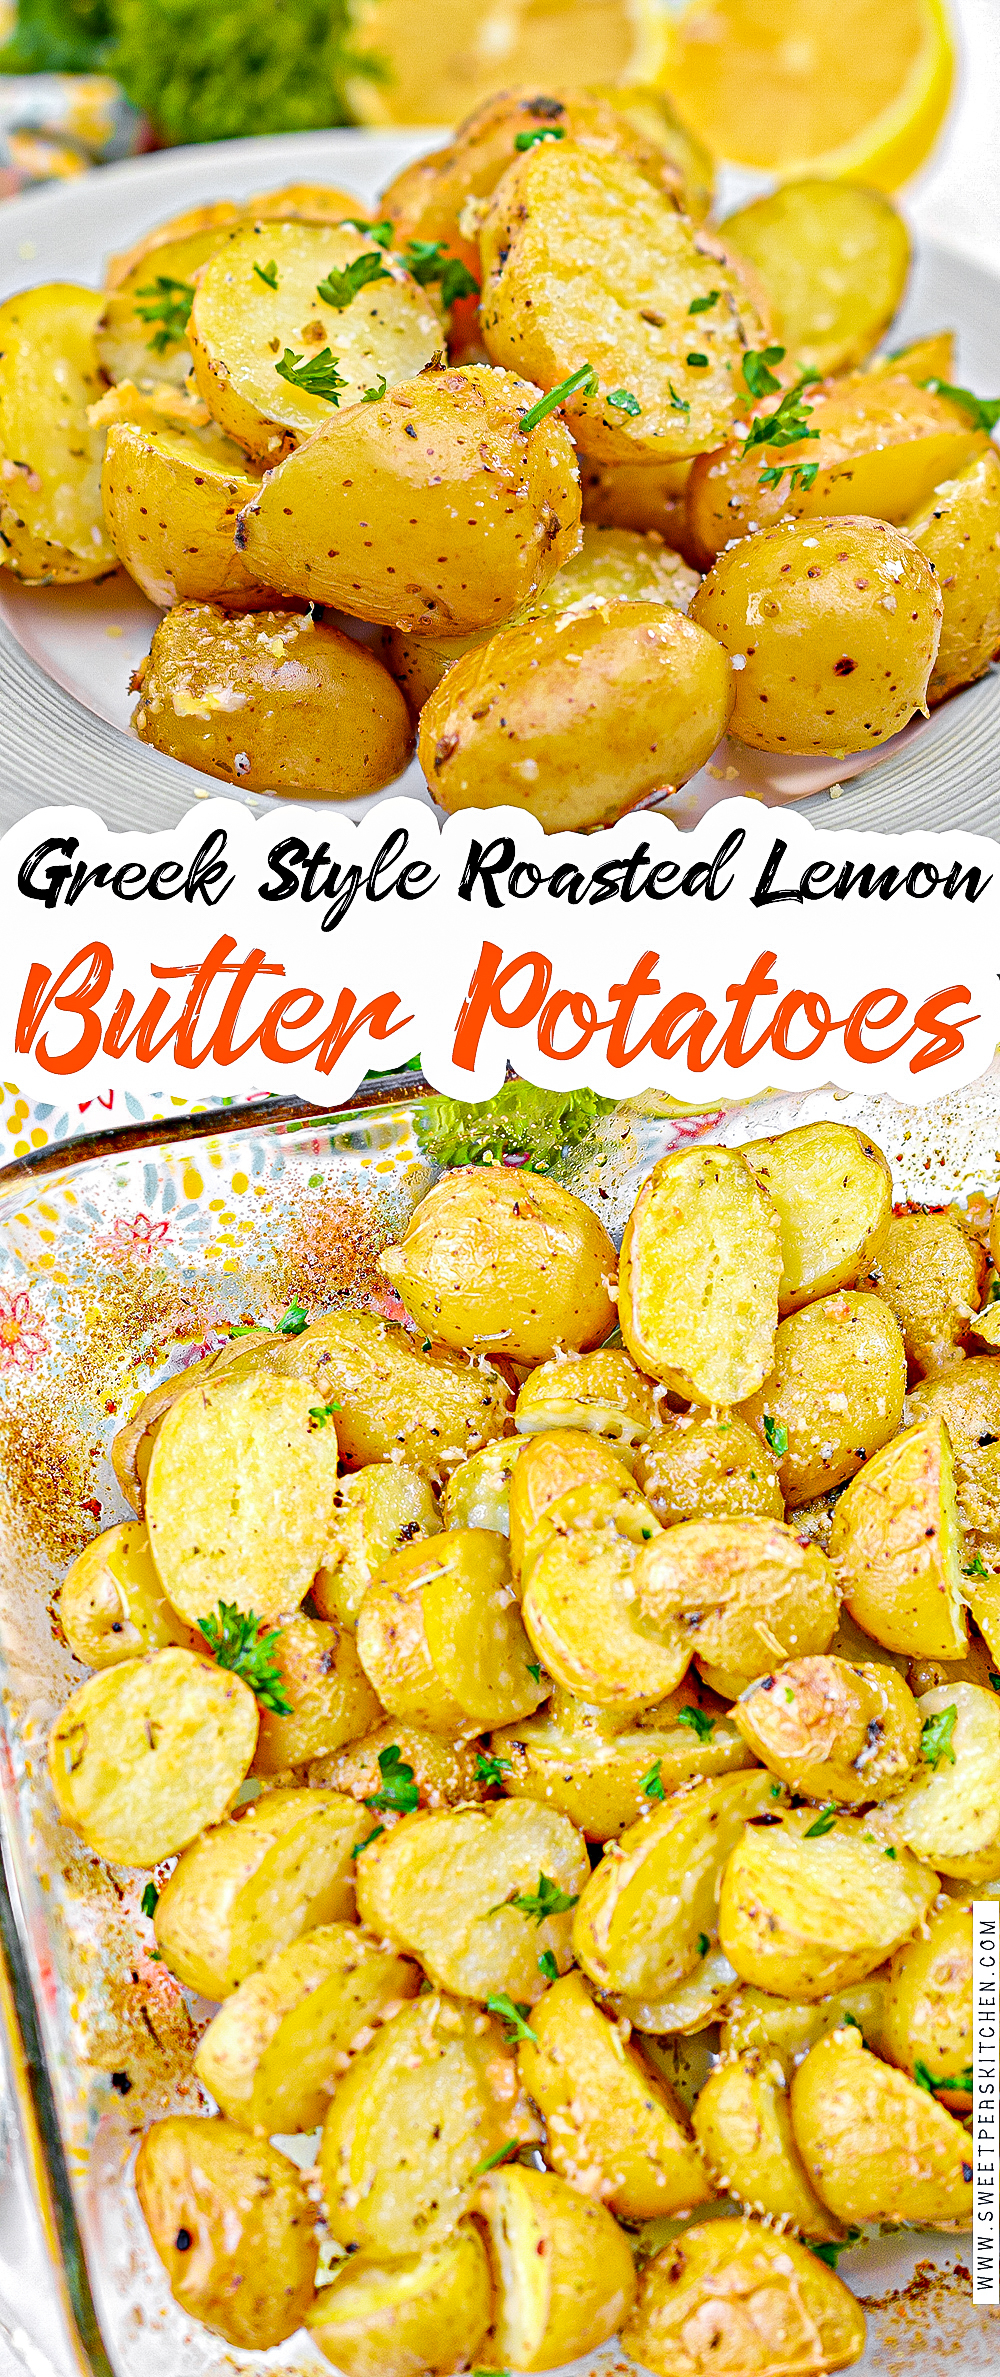 Greek Style Roasted Lemon Butter Potatoes on Pinterest